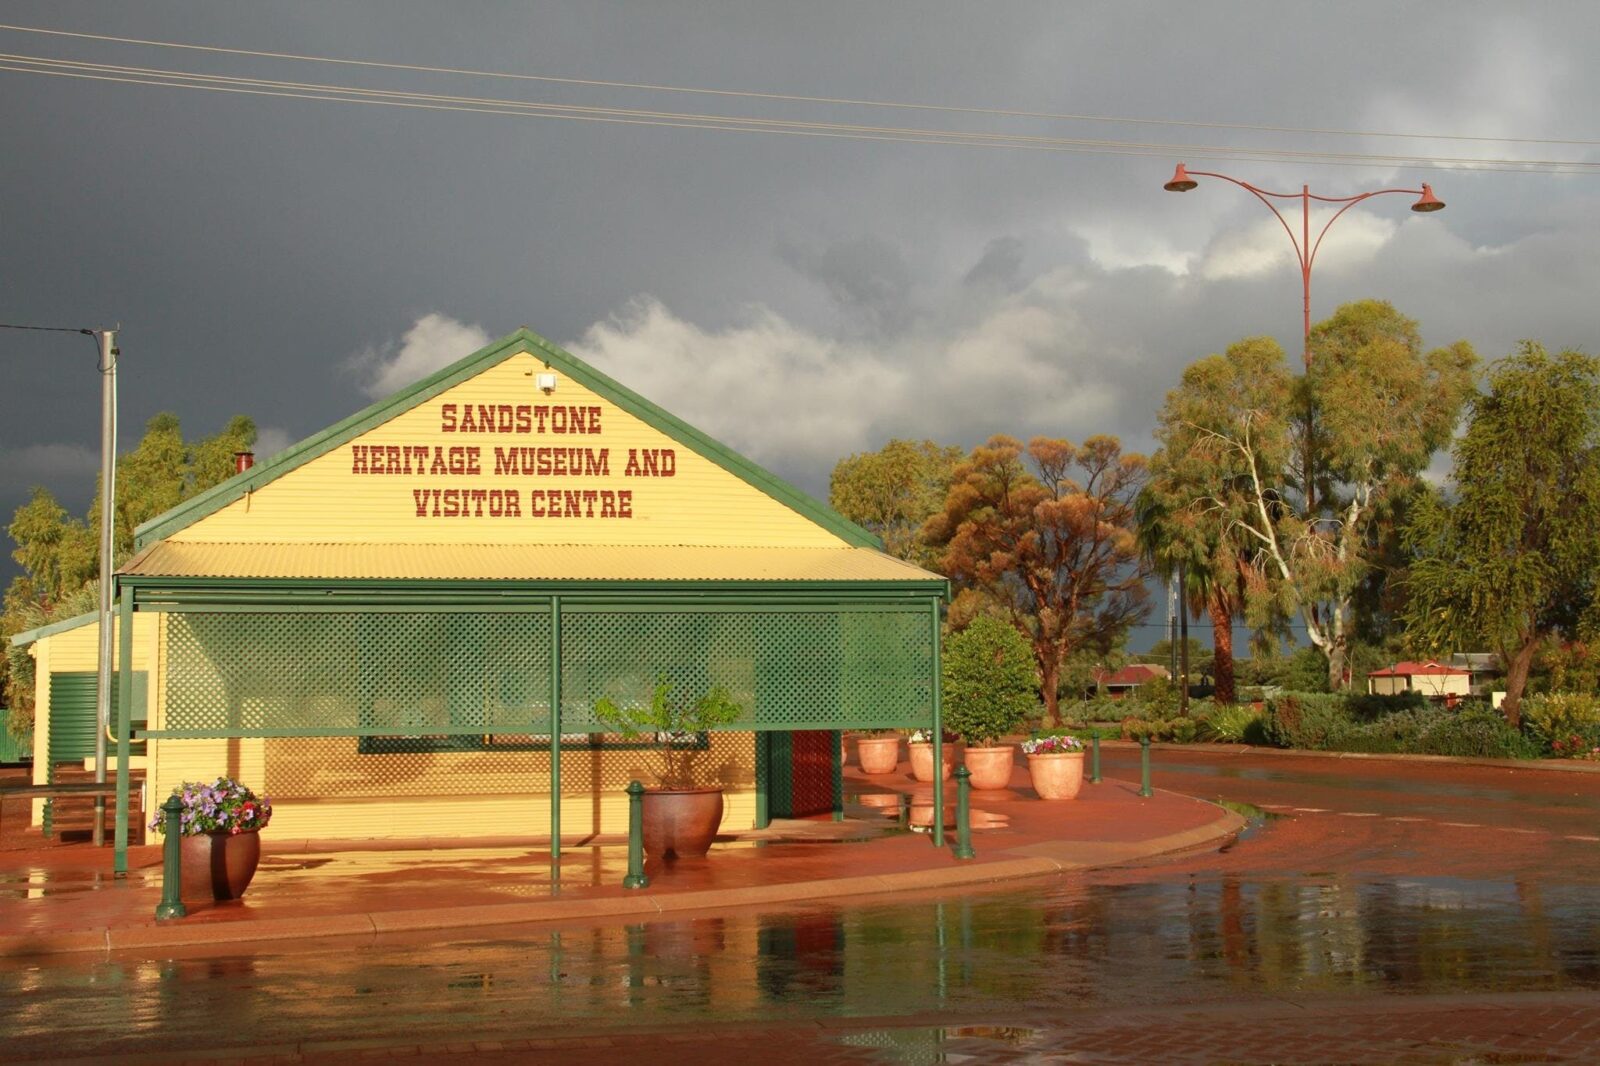 Sandstone Heritage Museum, Sandstone, Western Australia